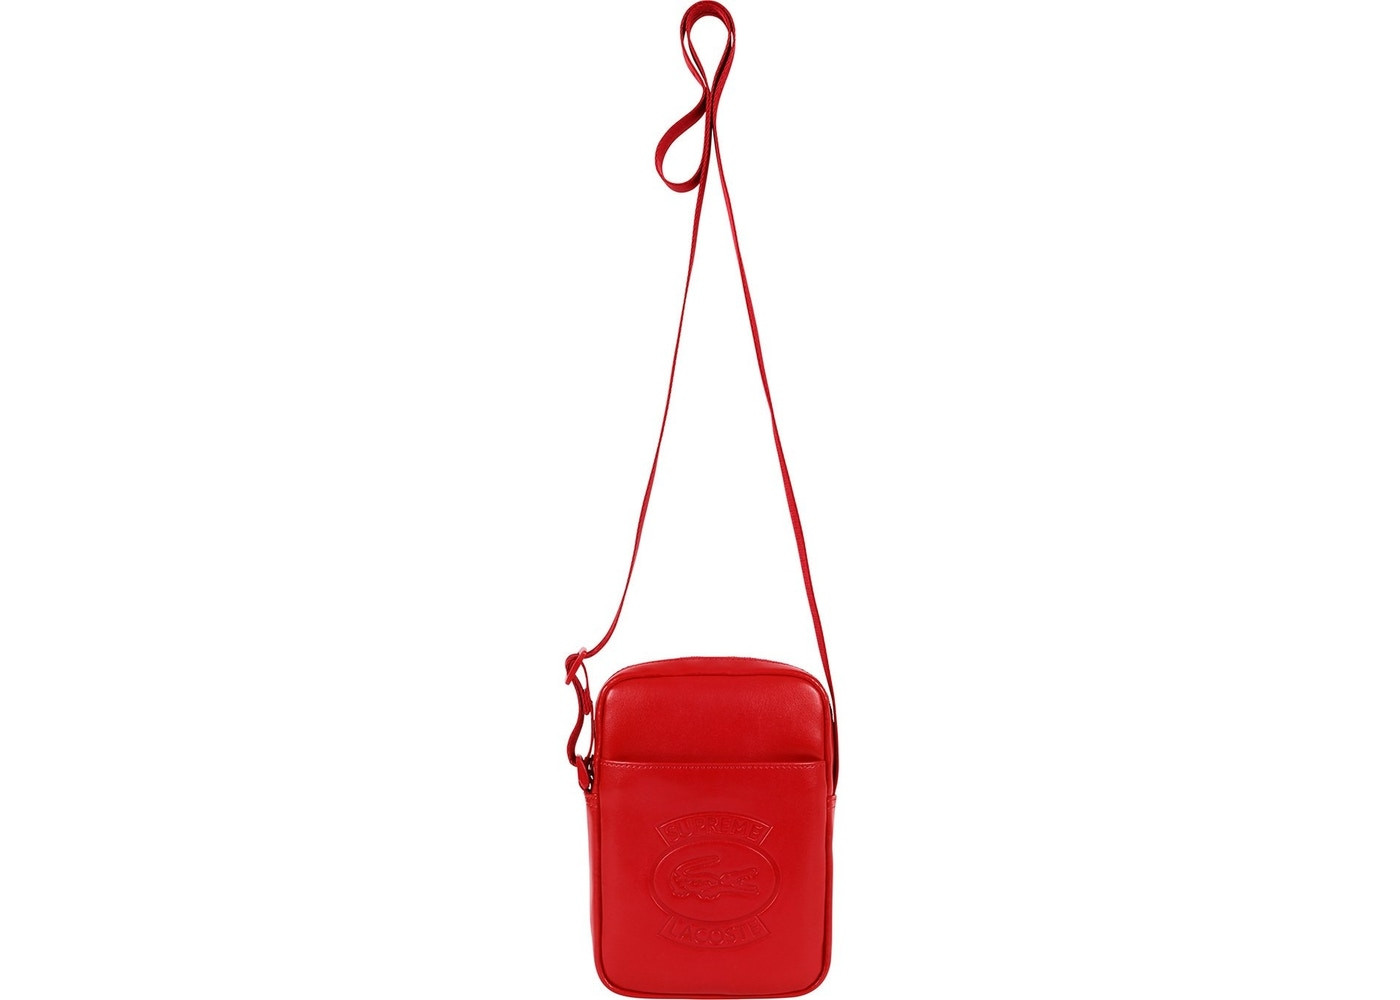 Lacoste Cross-body Bag in Red